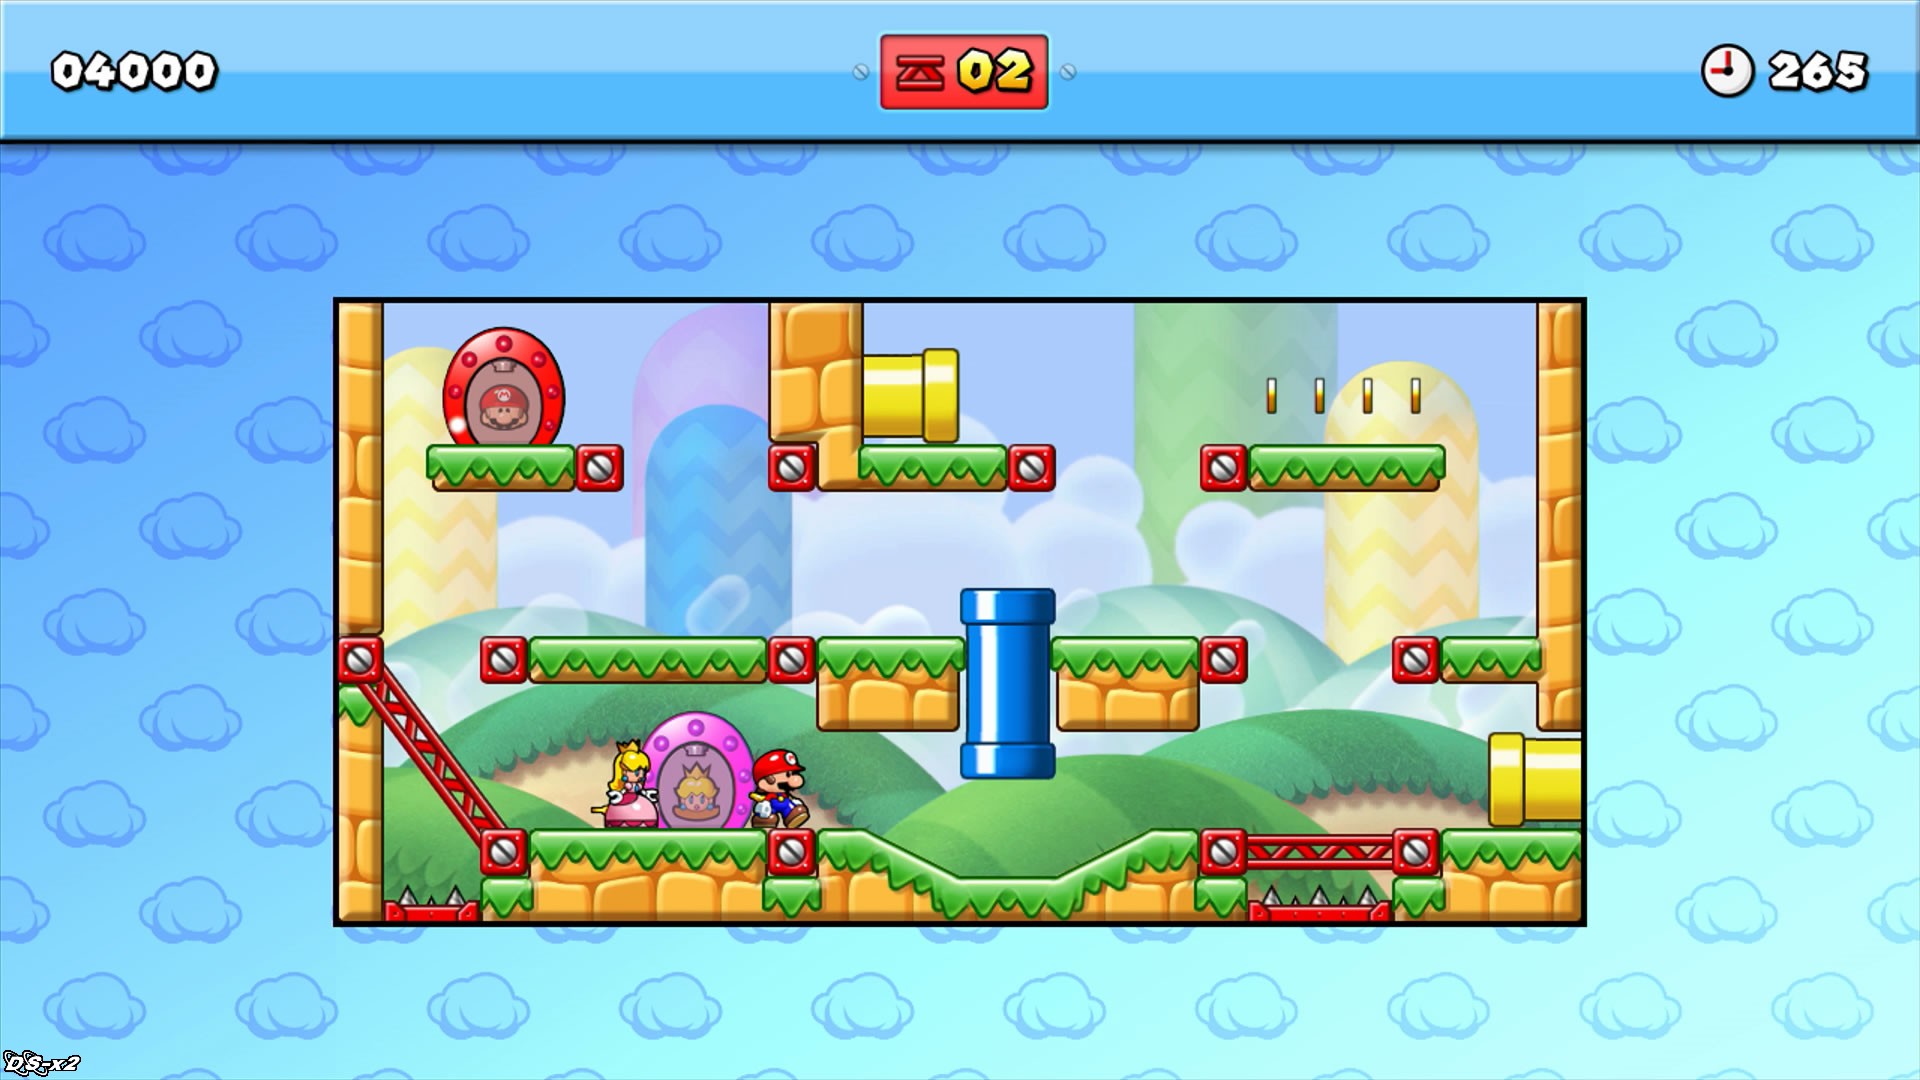 Screenshots of Mario vs Donkey Kong for Wii U